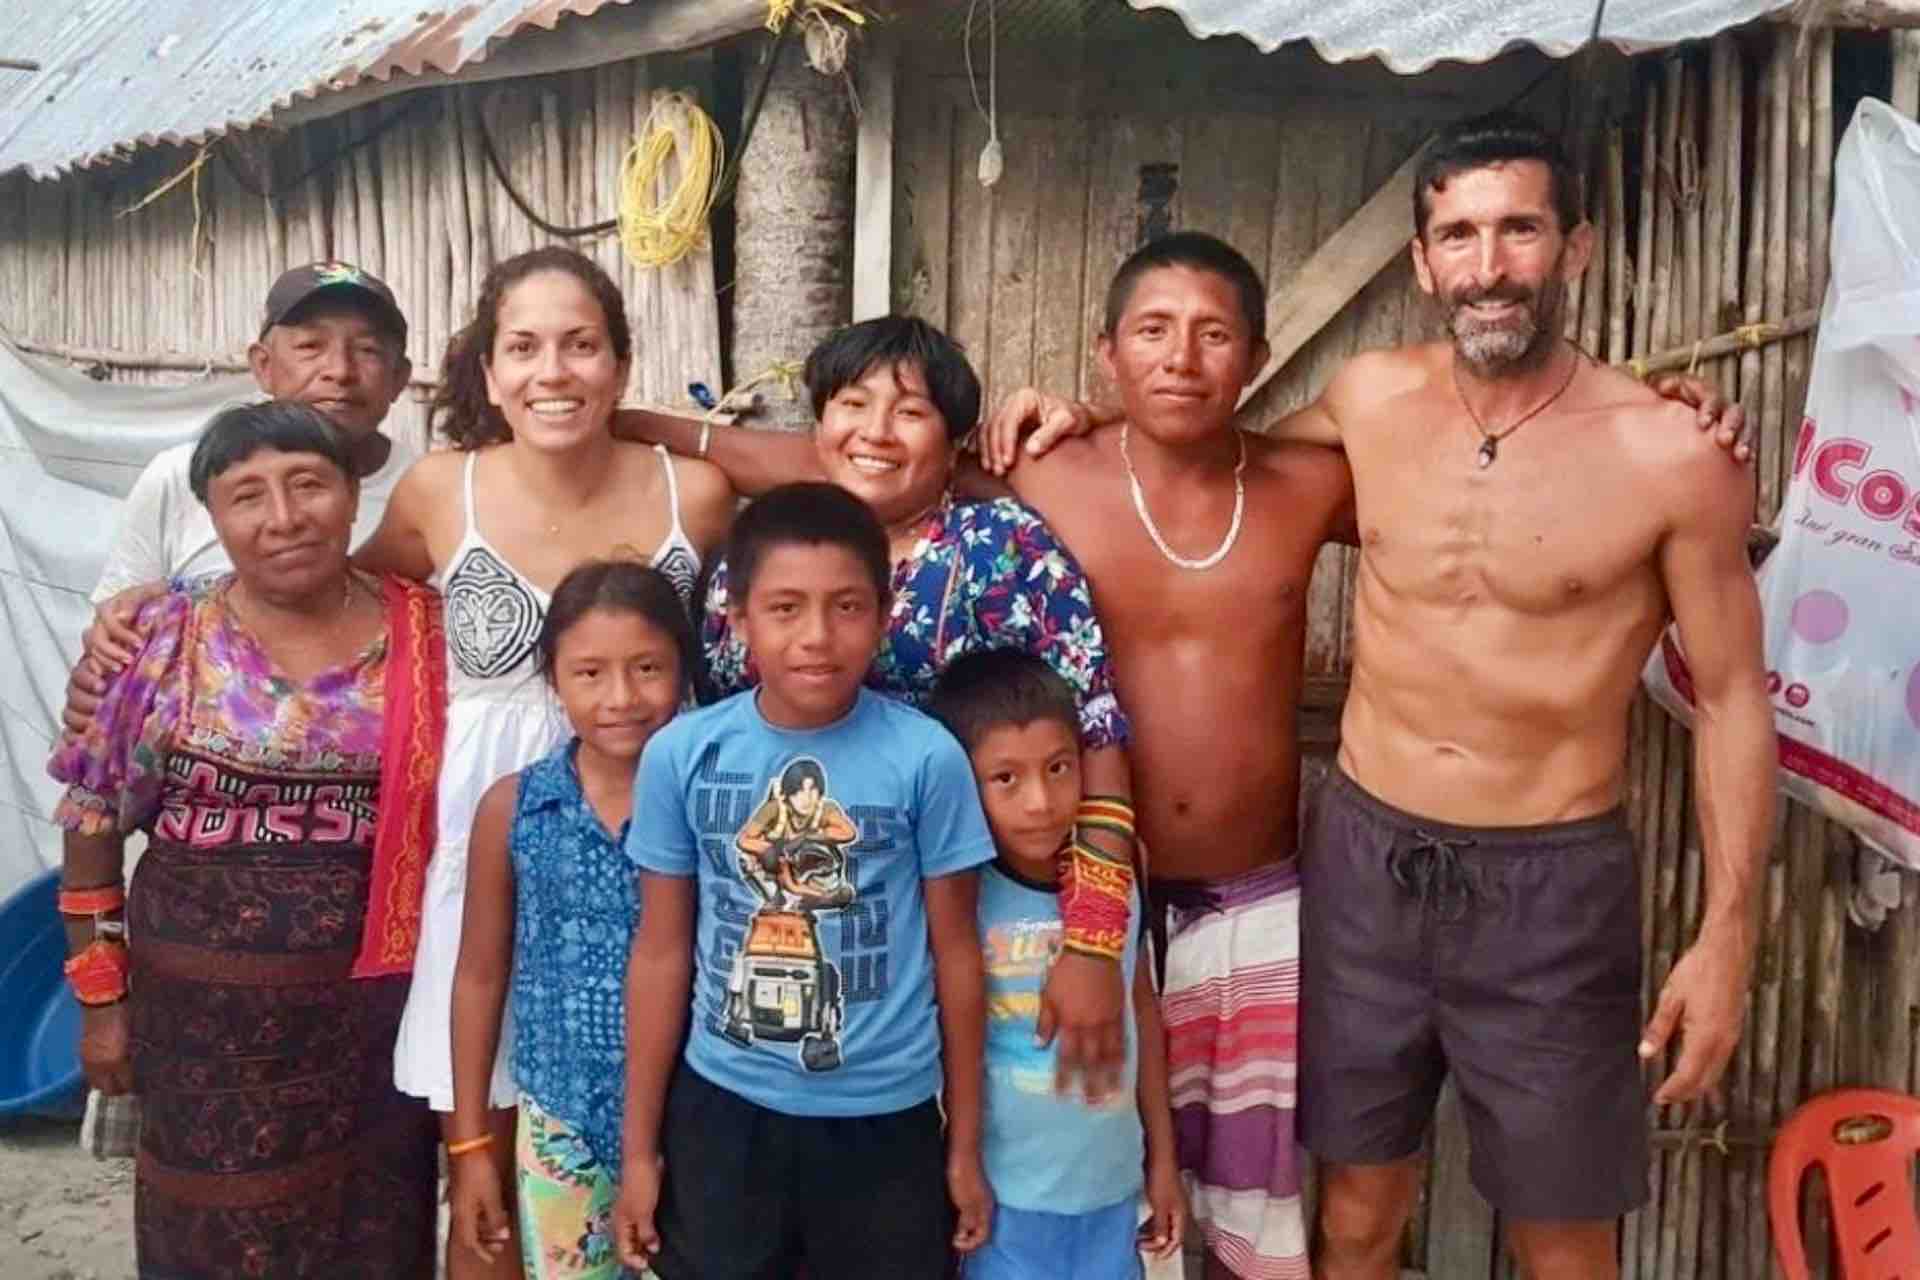 L'Eclektic II crew with local Kuna tribe